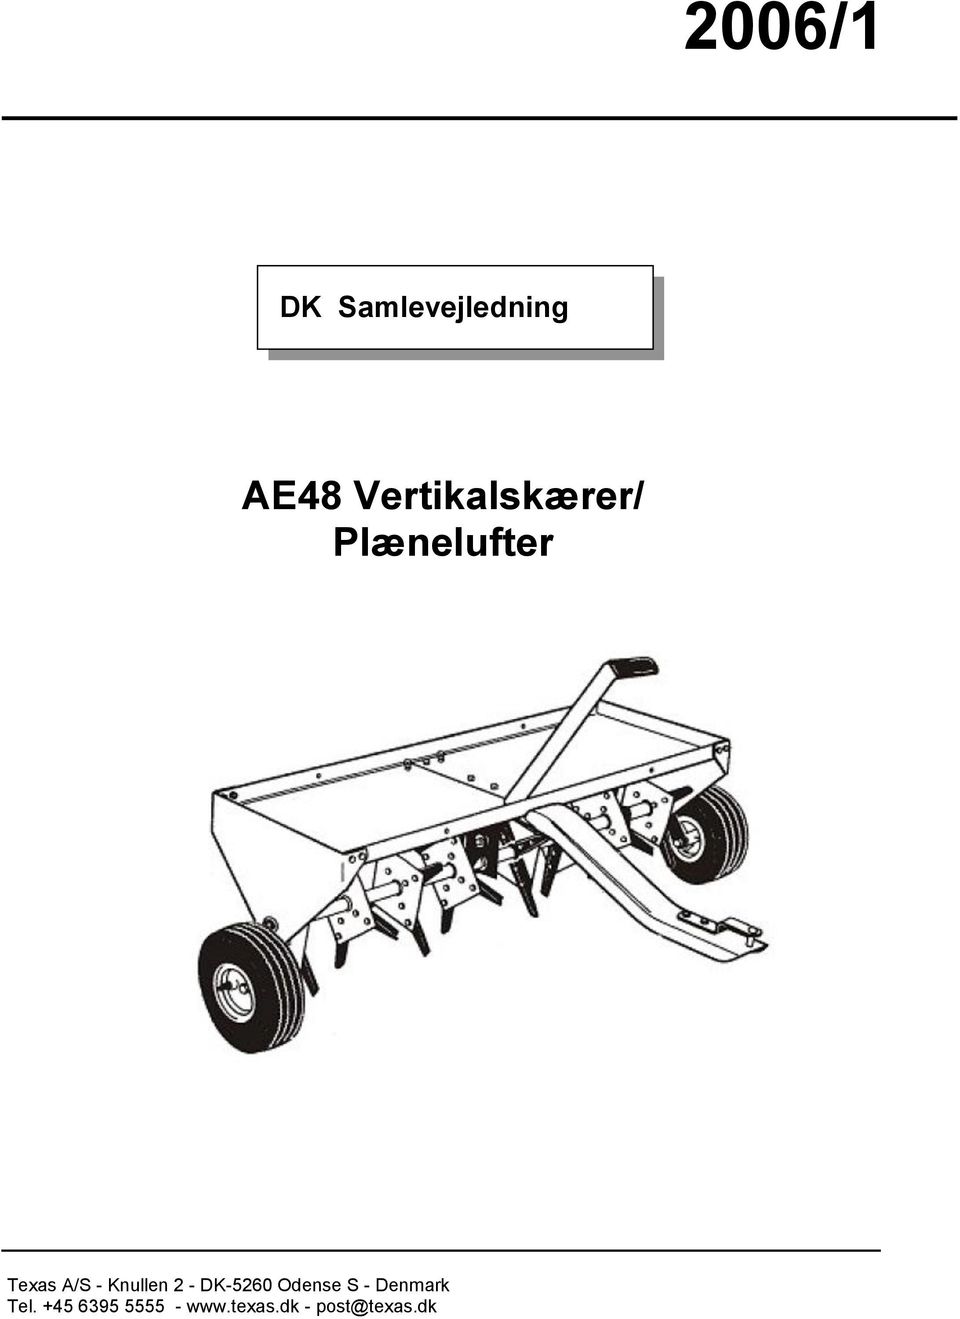 A/S - Knullen 2 - DK-5260 Odense S -